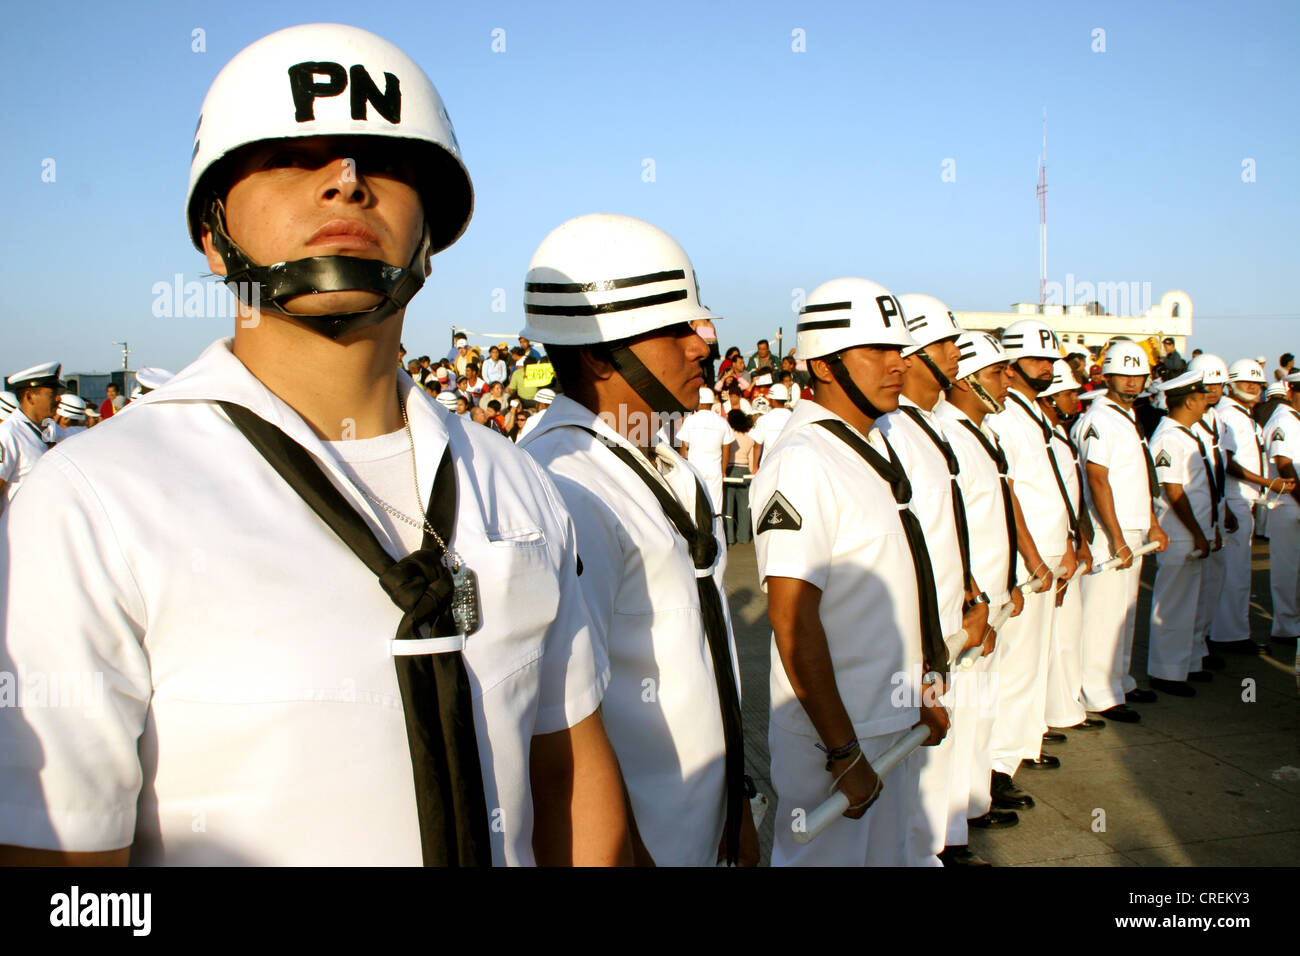 Mexican police in file and with white uniforms, Mexico, Veracruz, Veracruz Stock Photo